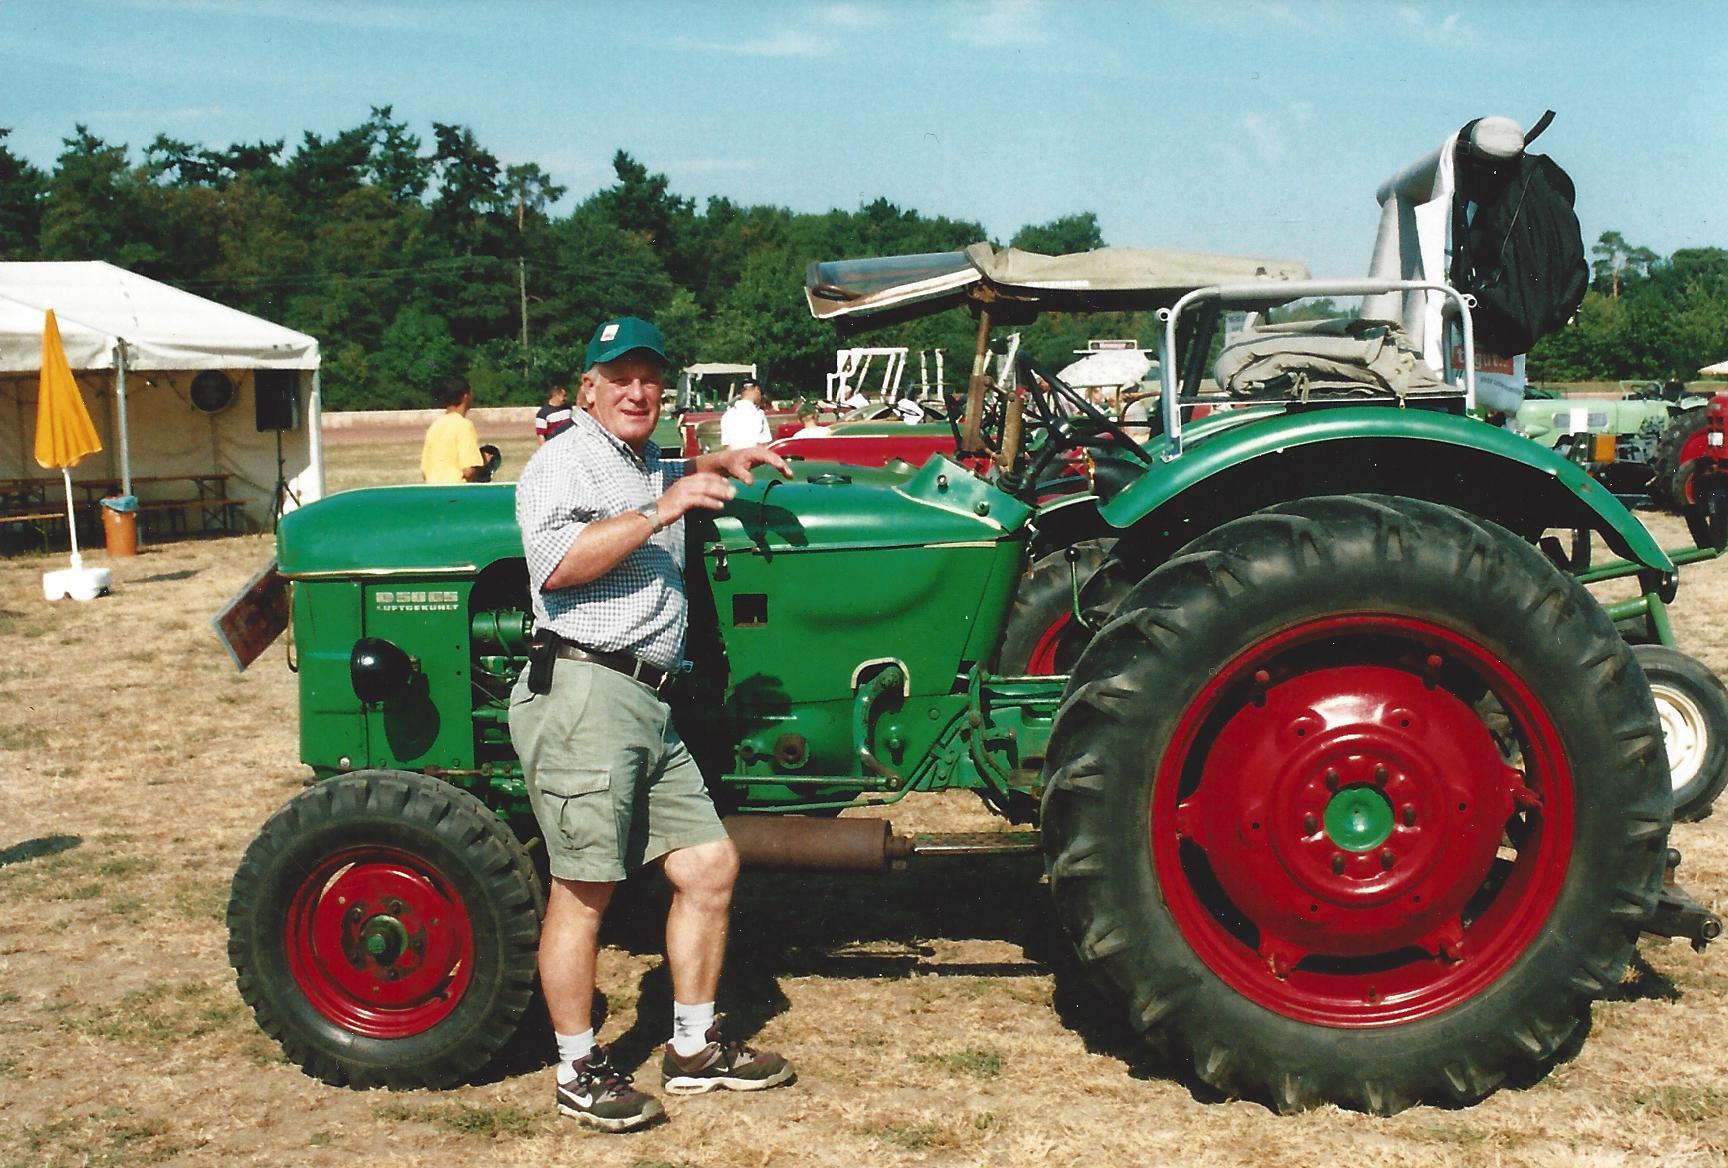 Traktor von Bodo Rosenberg